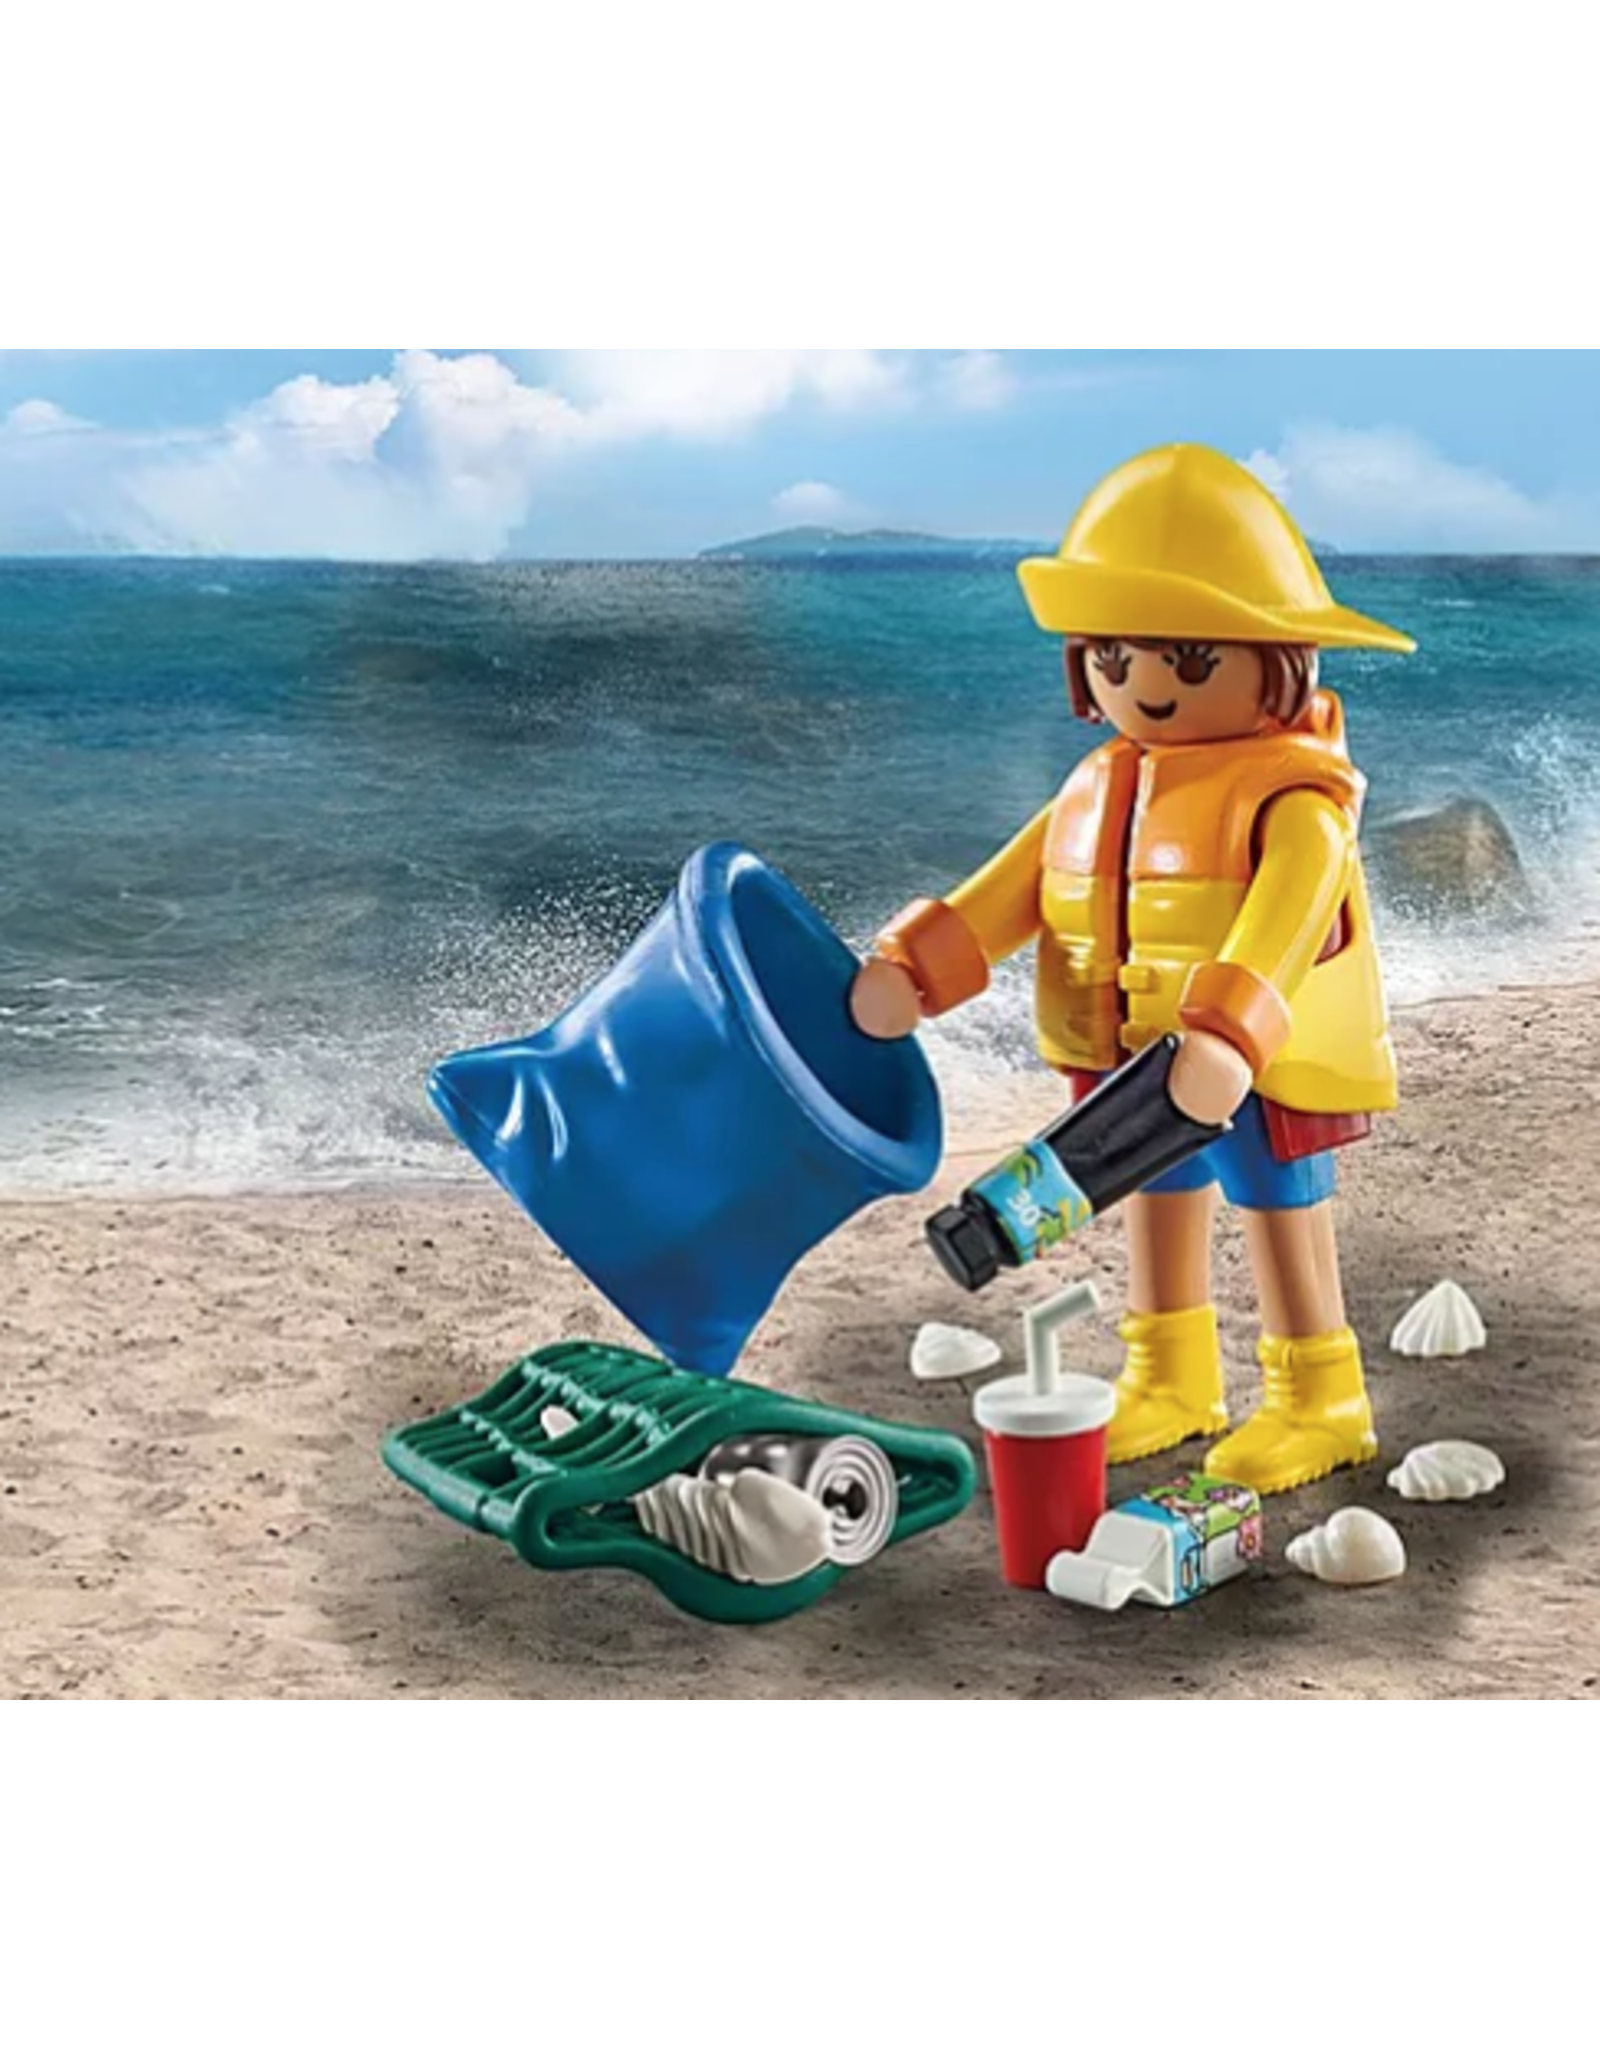 Playmobil Environmentalist